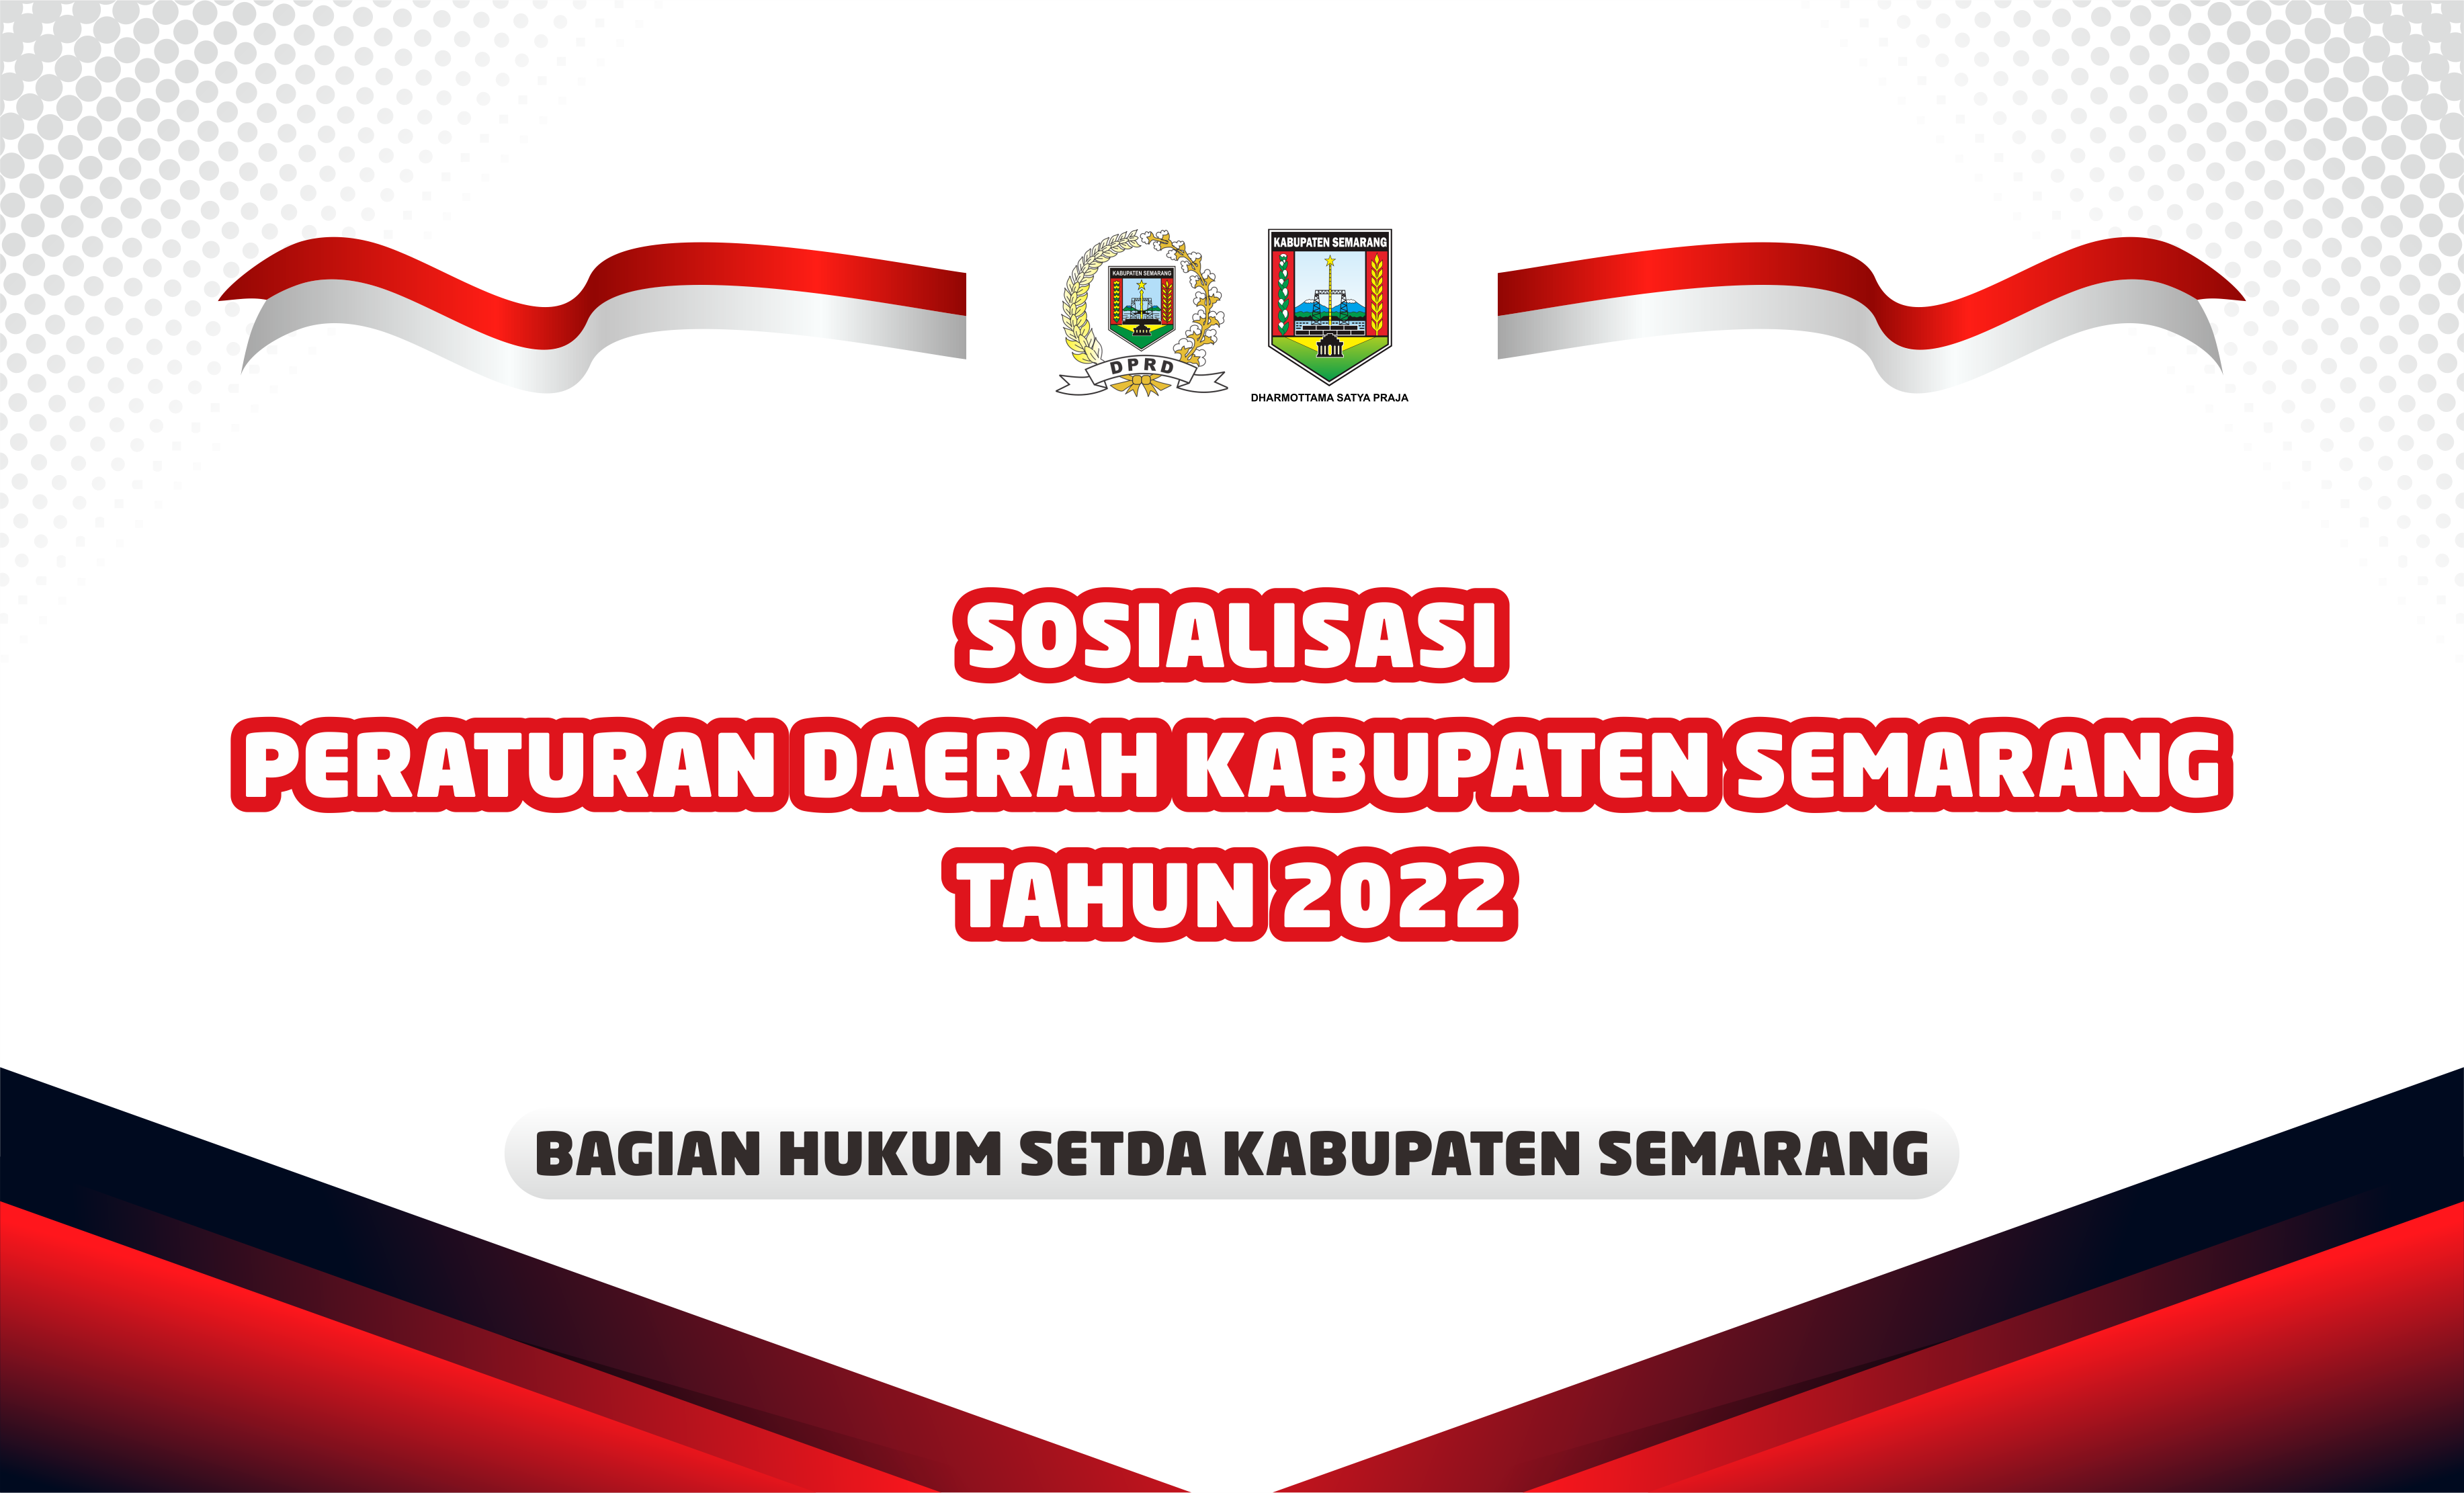 Sosialisasi Peraturan Daerah Kabupaten Semarang Tahun 2022